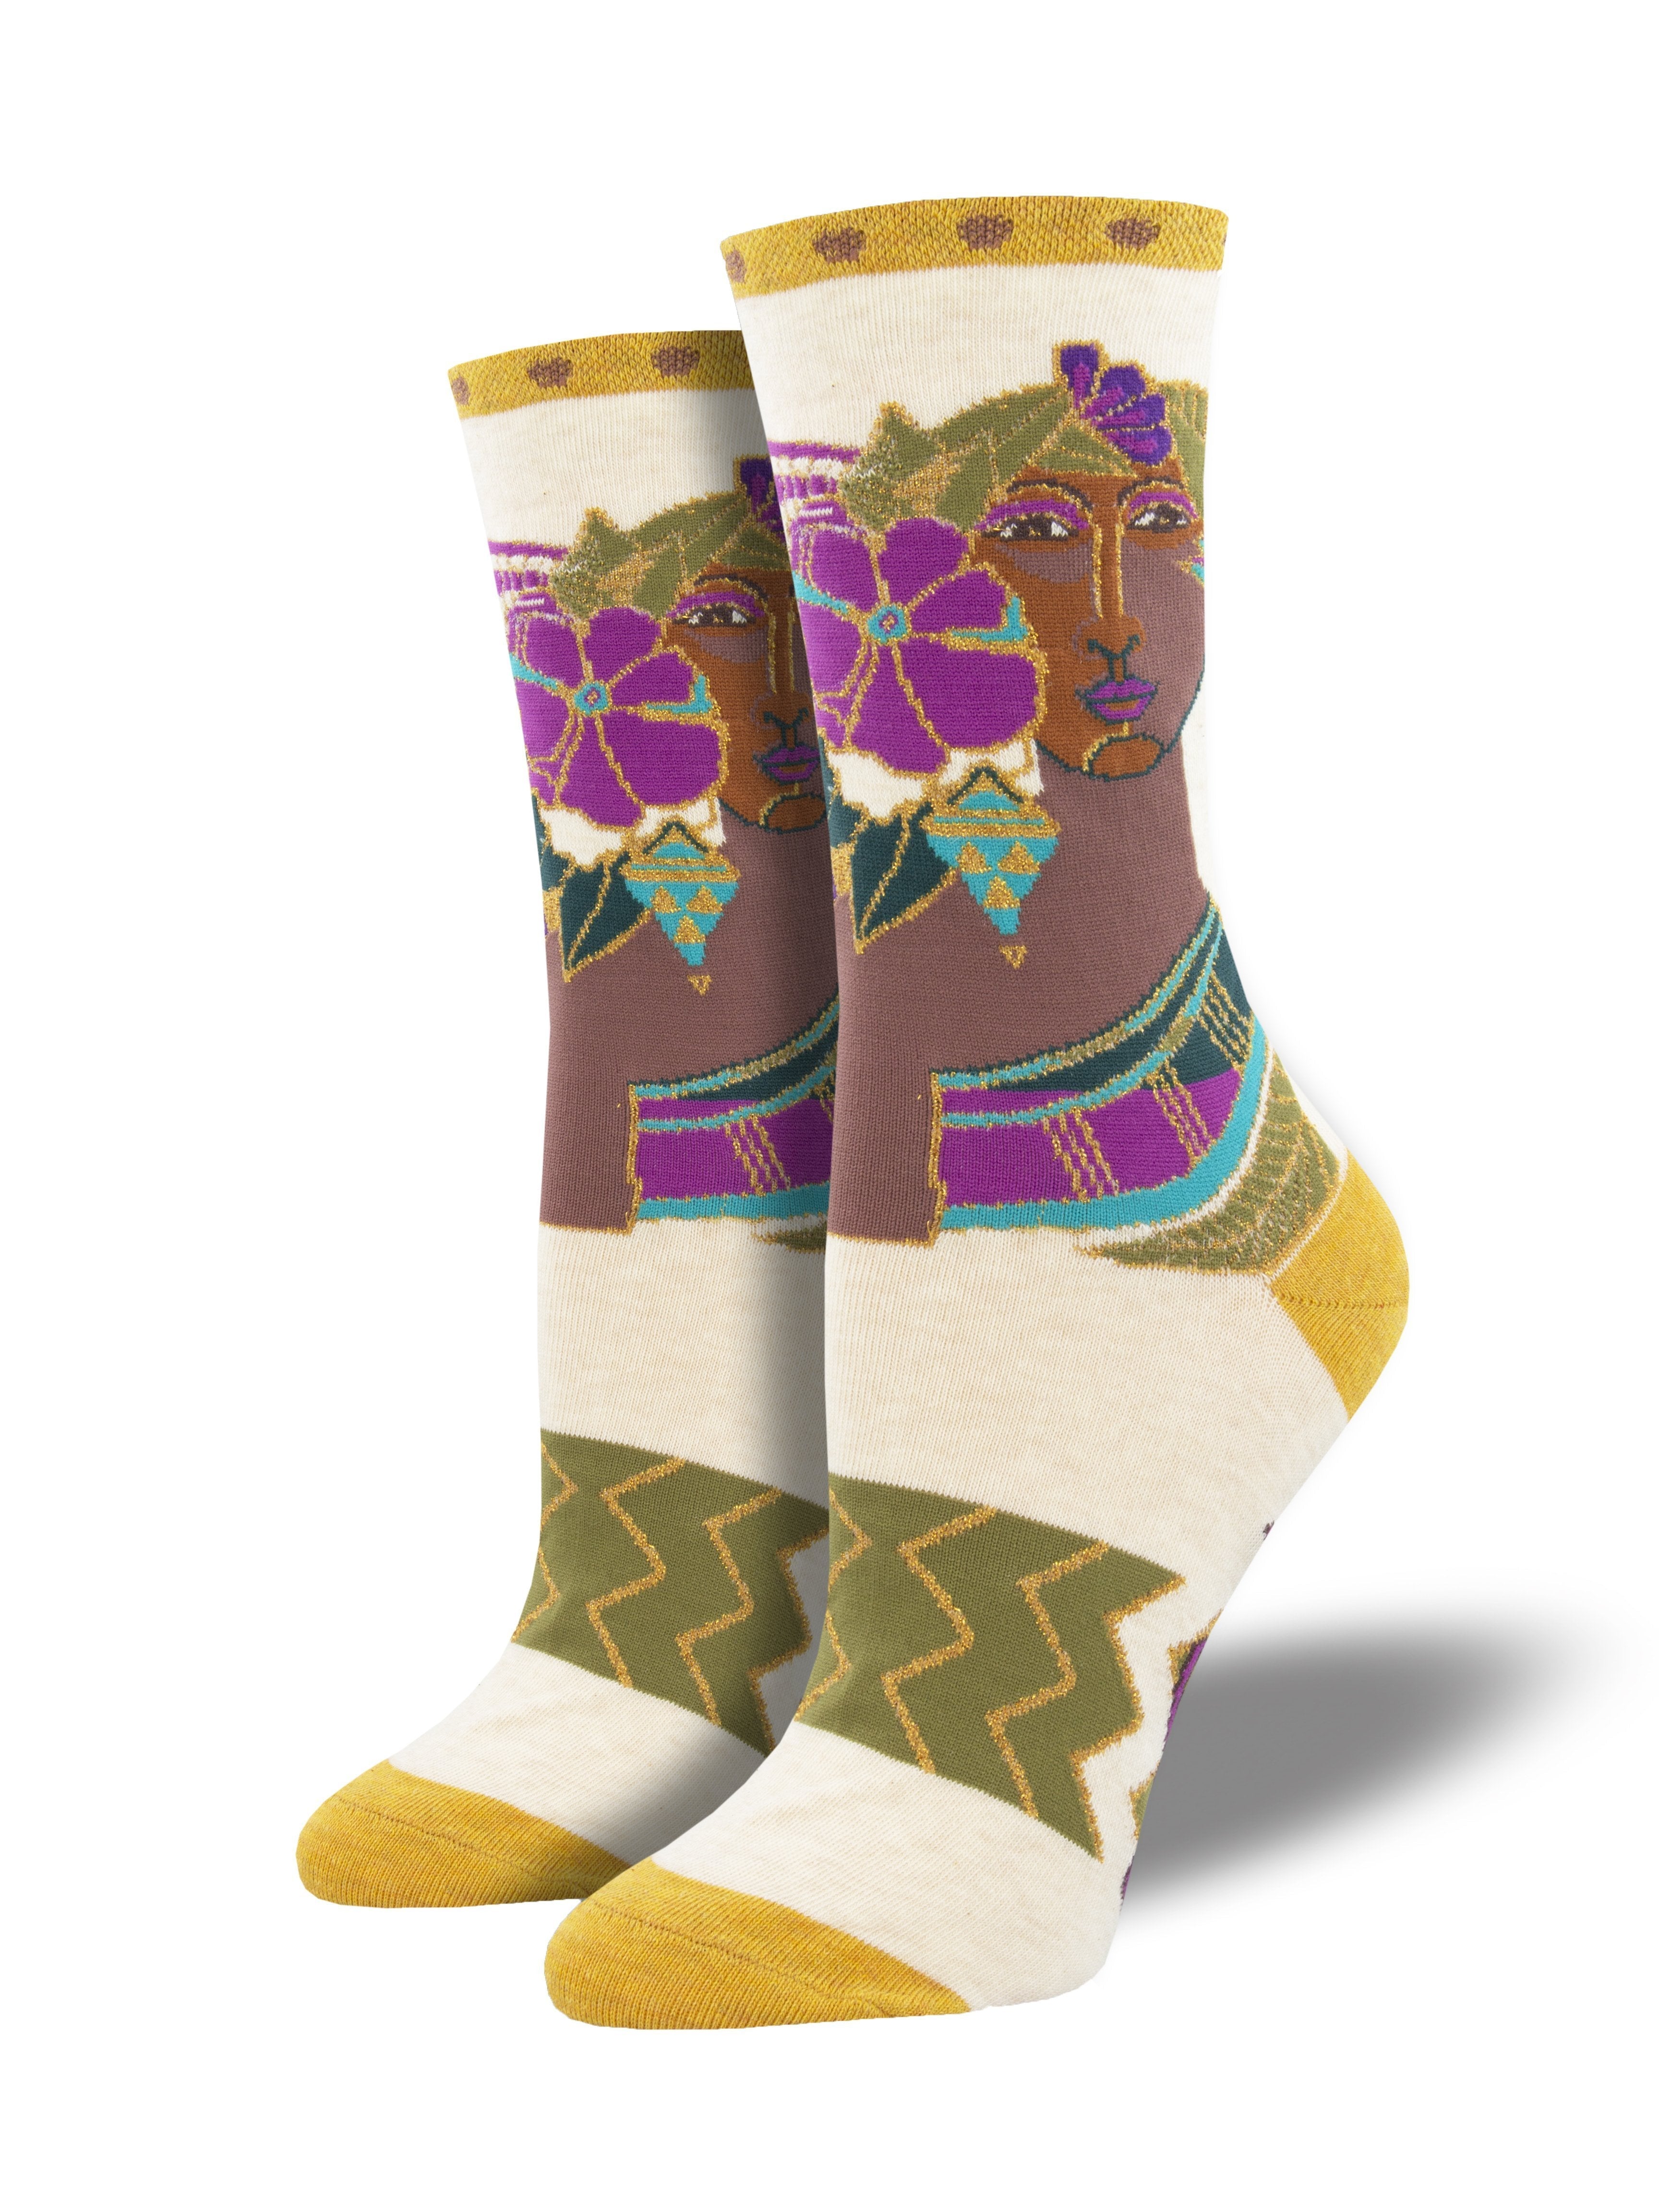 Women's Laurel Burch "Blossoming Woman" Socks